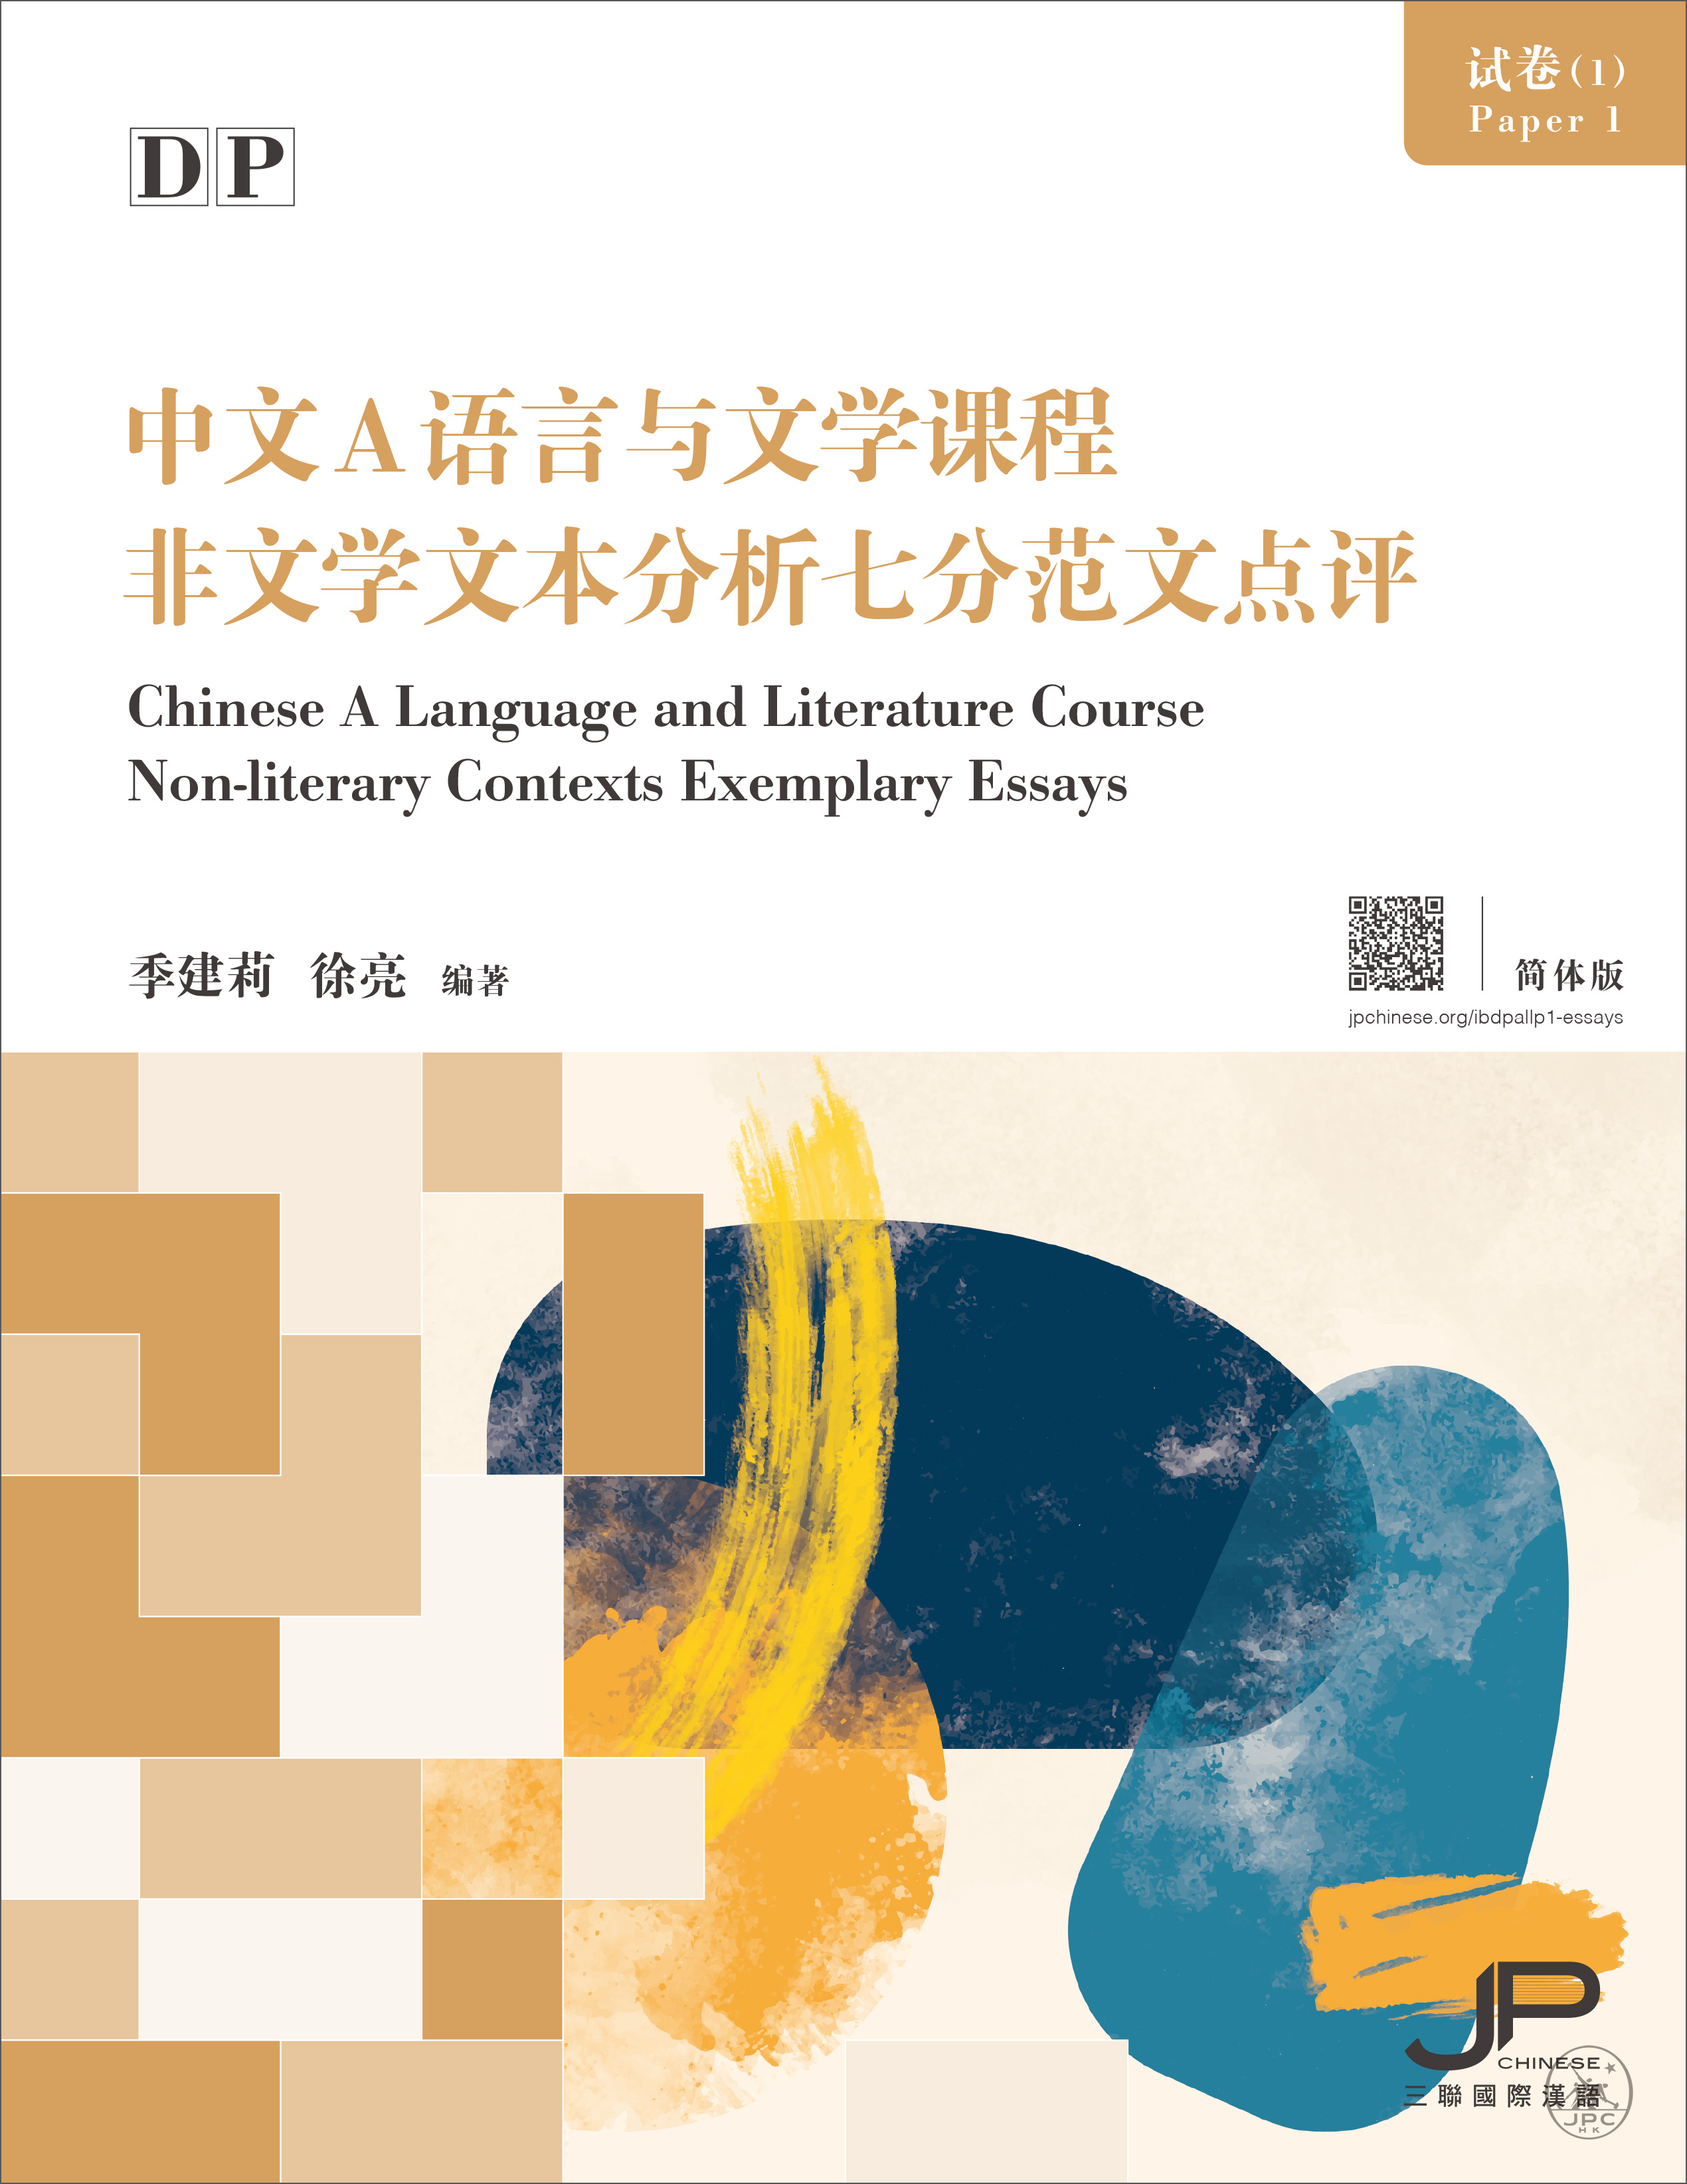 DP中文A语言与文学课程试卷 (1) 非文学文本分析七分范文点评 (简体版)  DP Chinese A Language and Literature Course Non-Literary Contexts Exemplary Essay   